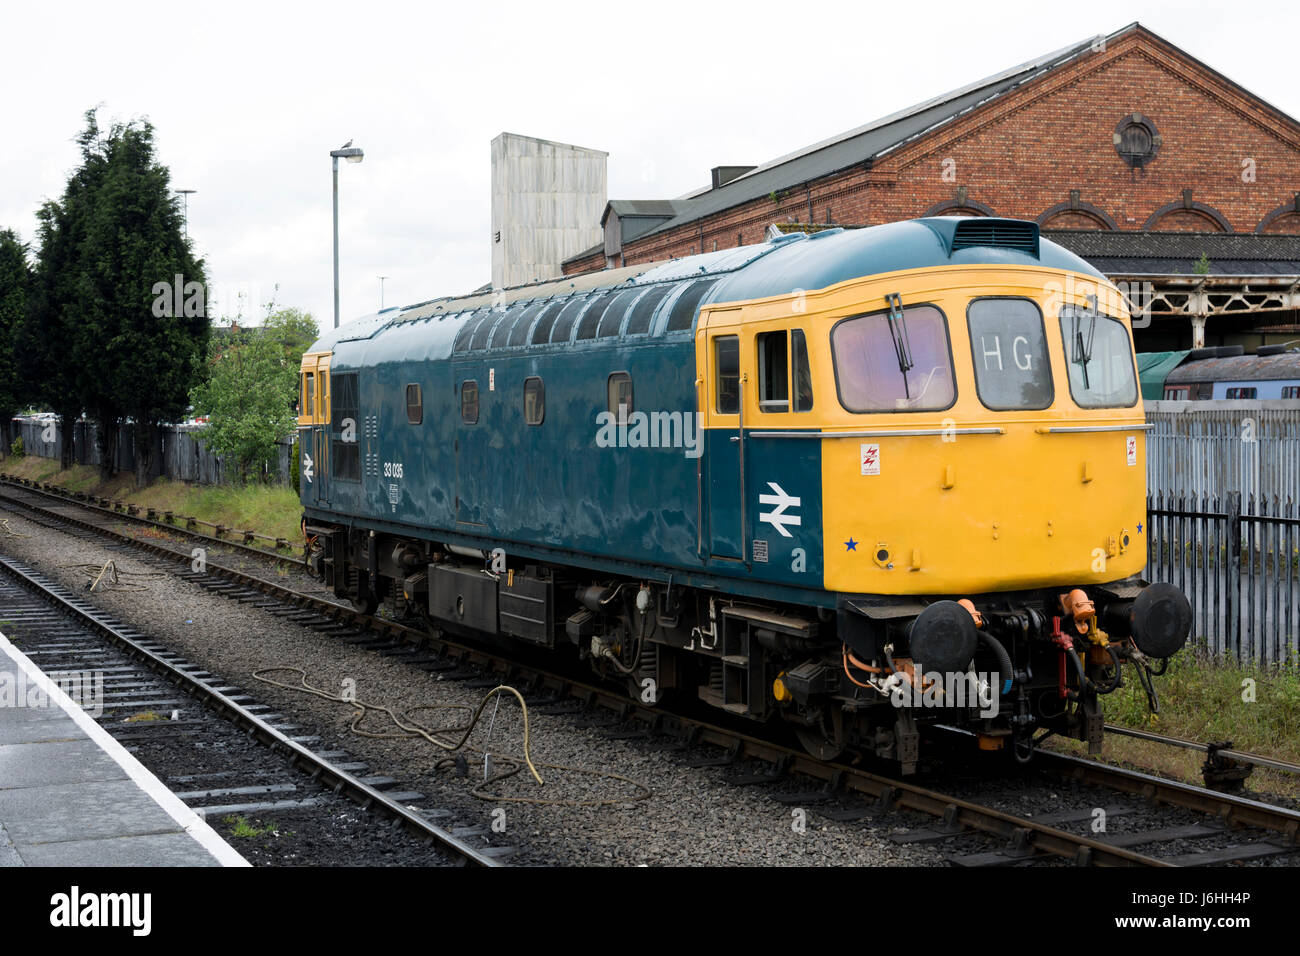 Class 33 diesel locomotive No 33035 at the Severn Valley Railway, Kidderminster station, UK Stock Photo